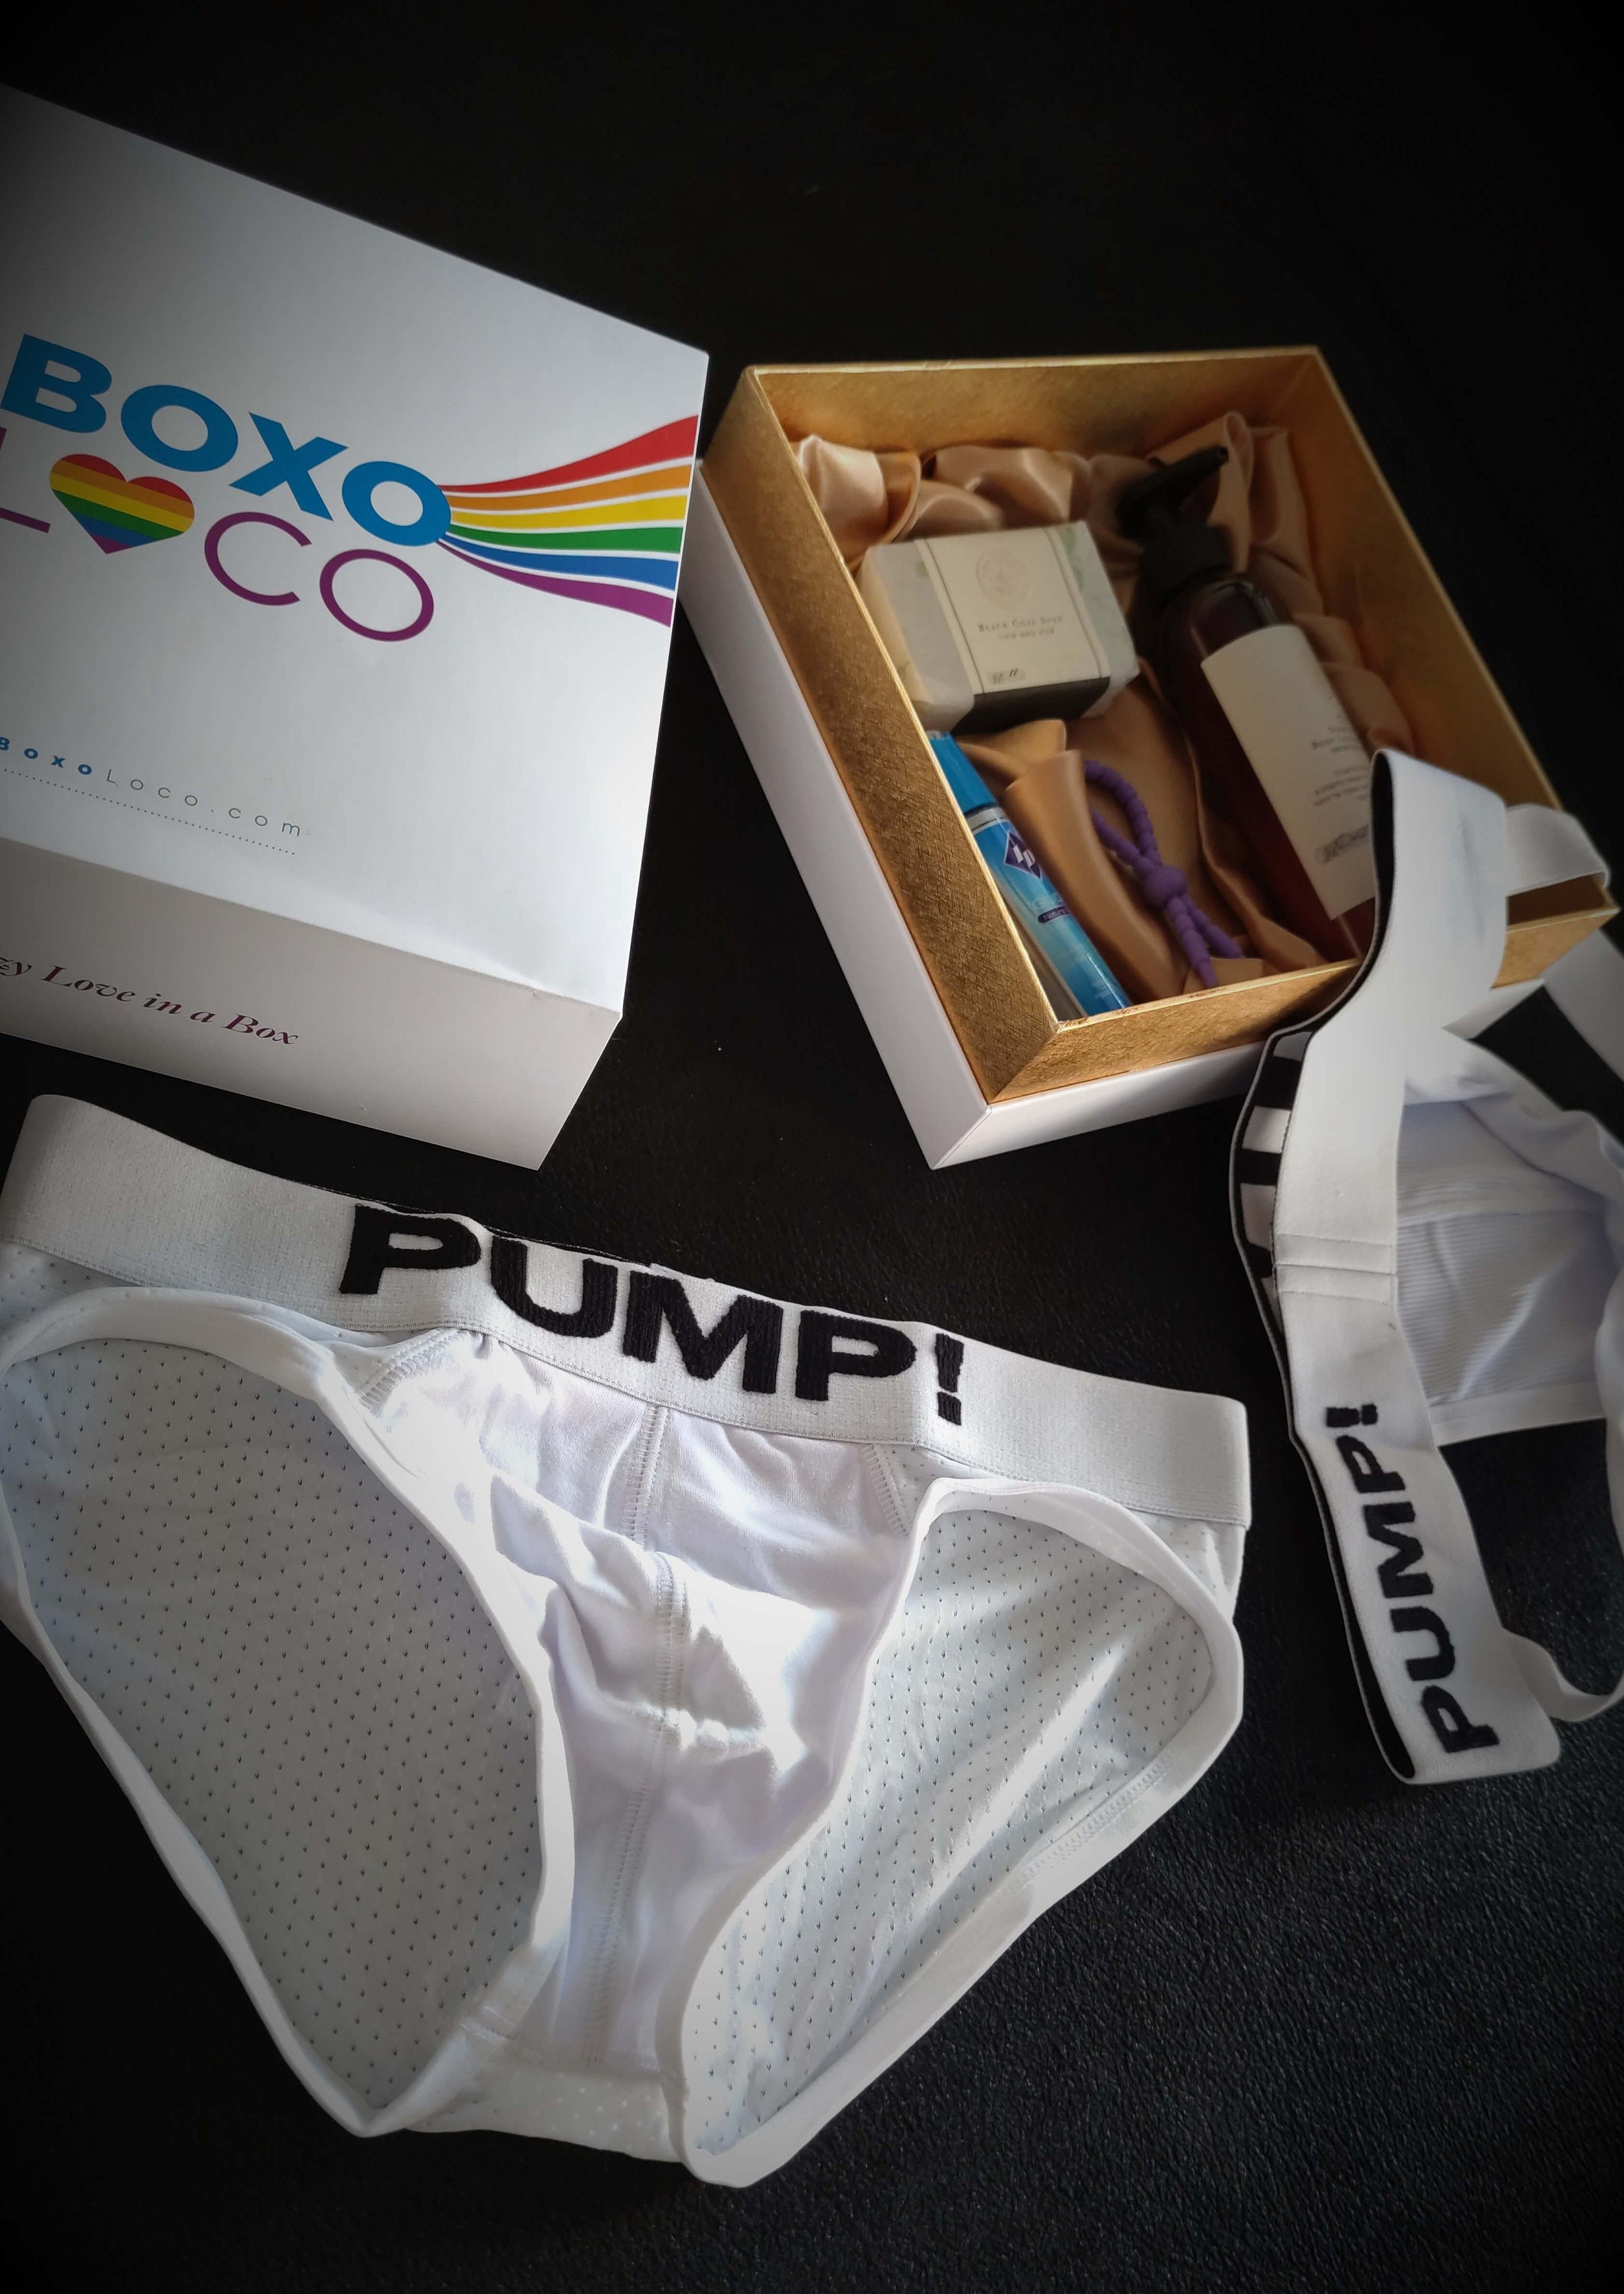 Gay sexy gift, BoxoLoco